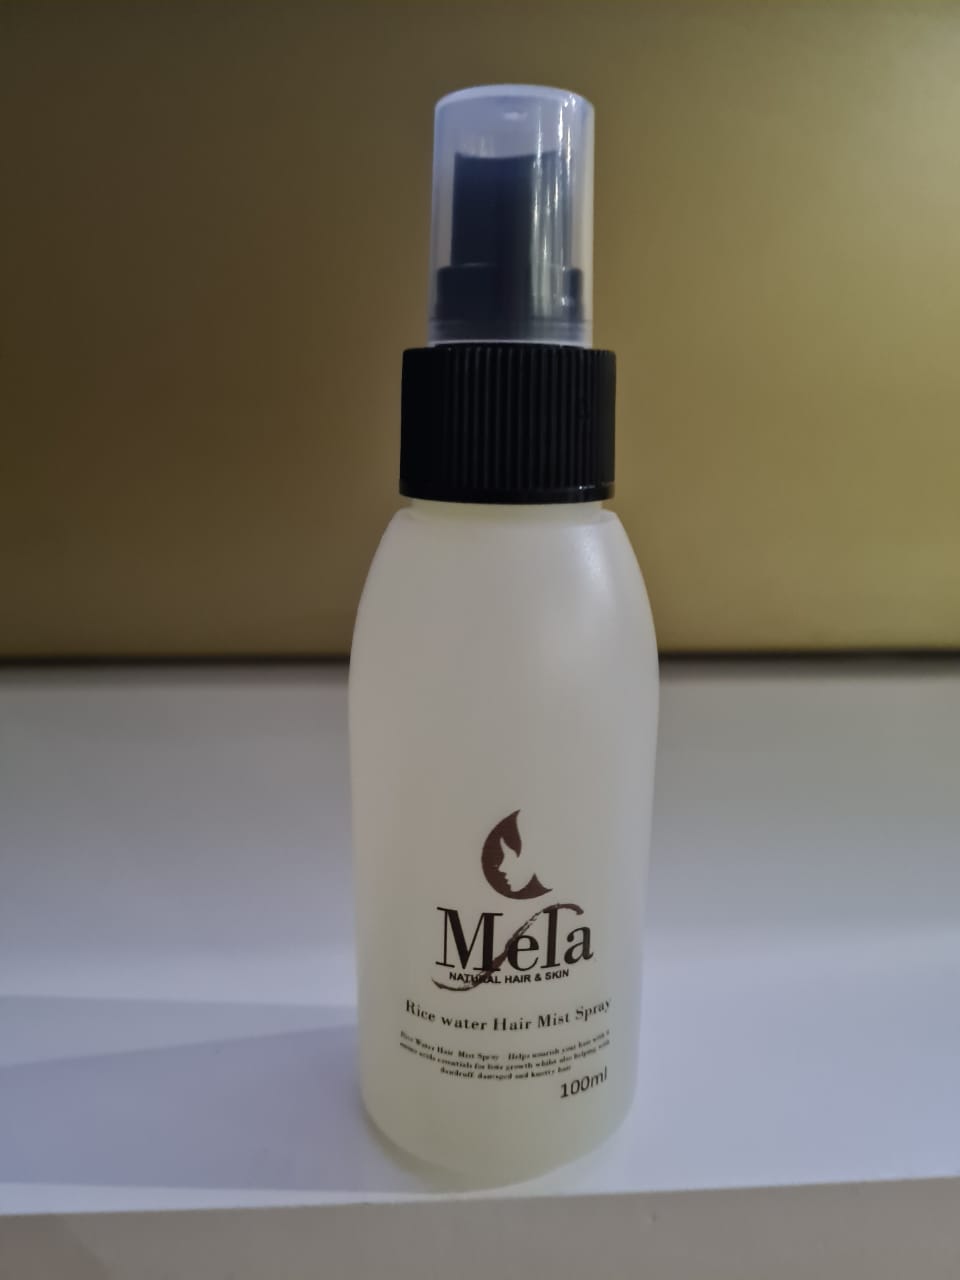 Rice Water Hair Mist Spray - Mela Natural Hair and Skin